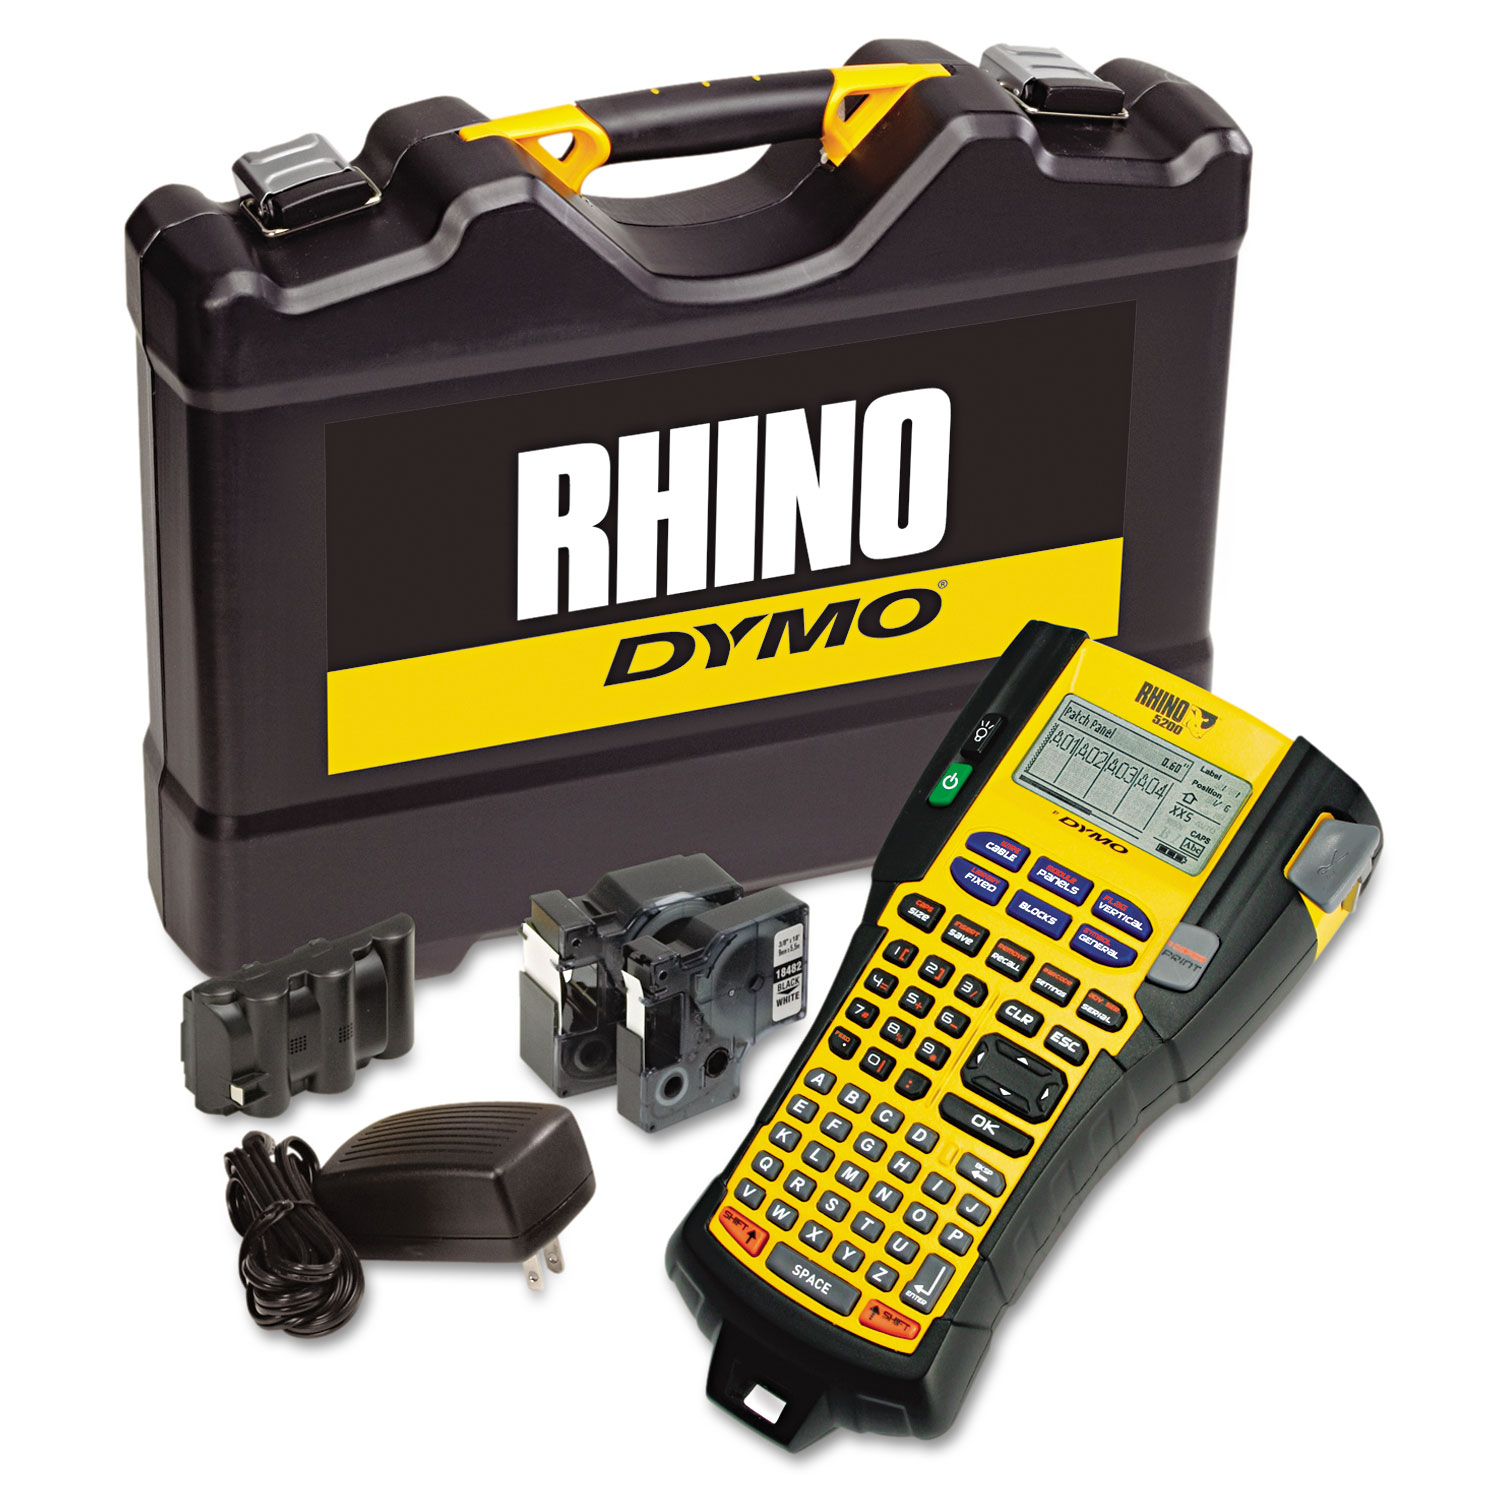  DYMO 1756589 Rhino 5200 Industrial Label Maker Kit, 5 Lines, 4 9/10w x 9 1/5d x 2 1/2h (DYM1756589) 